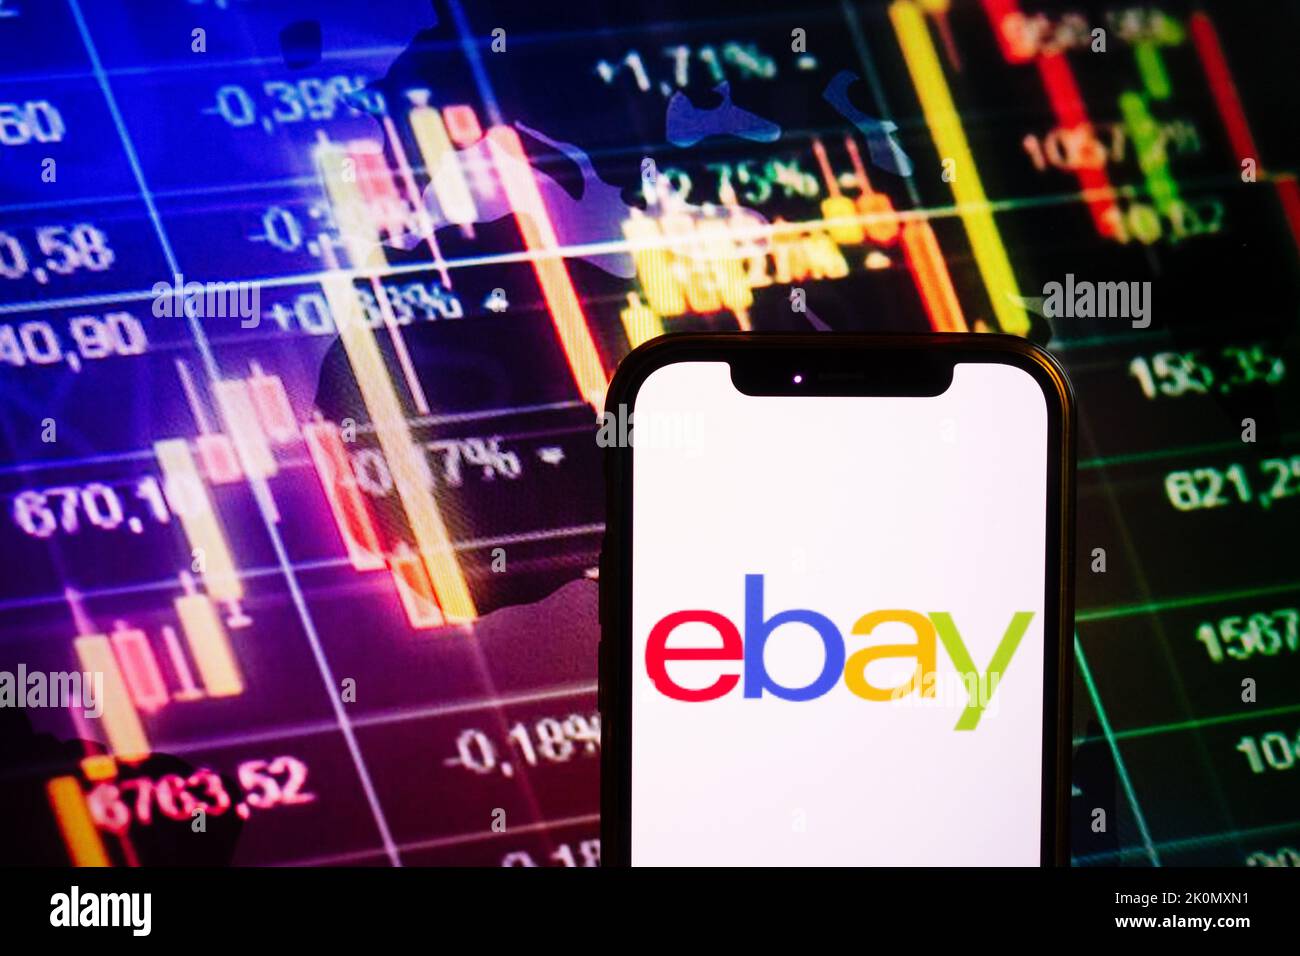 KONSKIE, POLAND - September 10, 2022: Smartphone displaying logo of eBay company on stock exchange diagram background Stock Photo